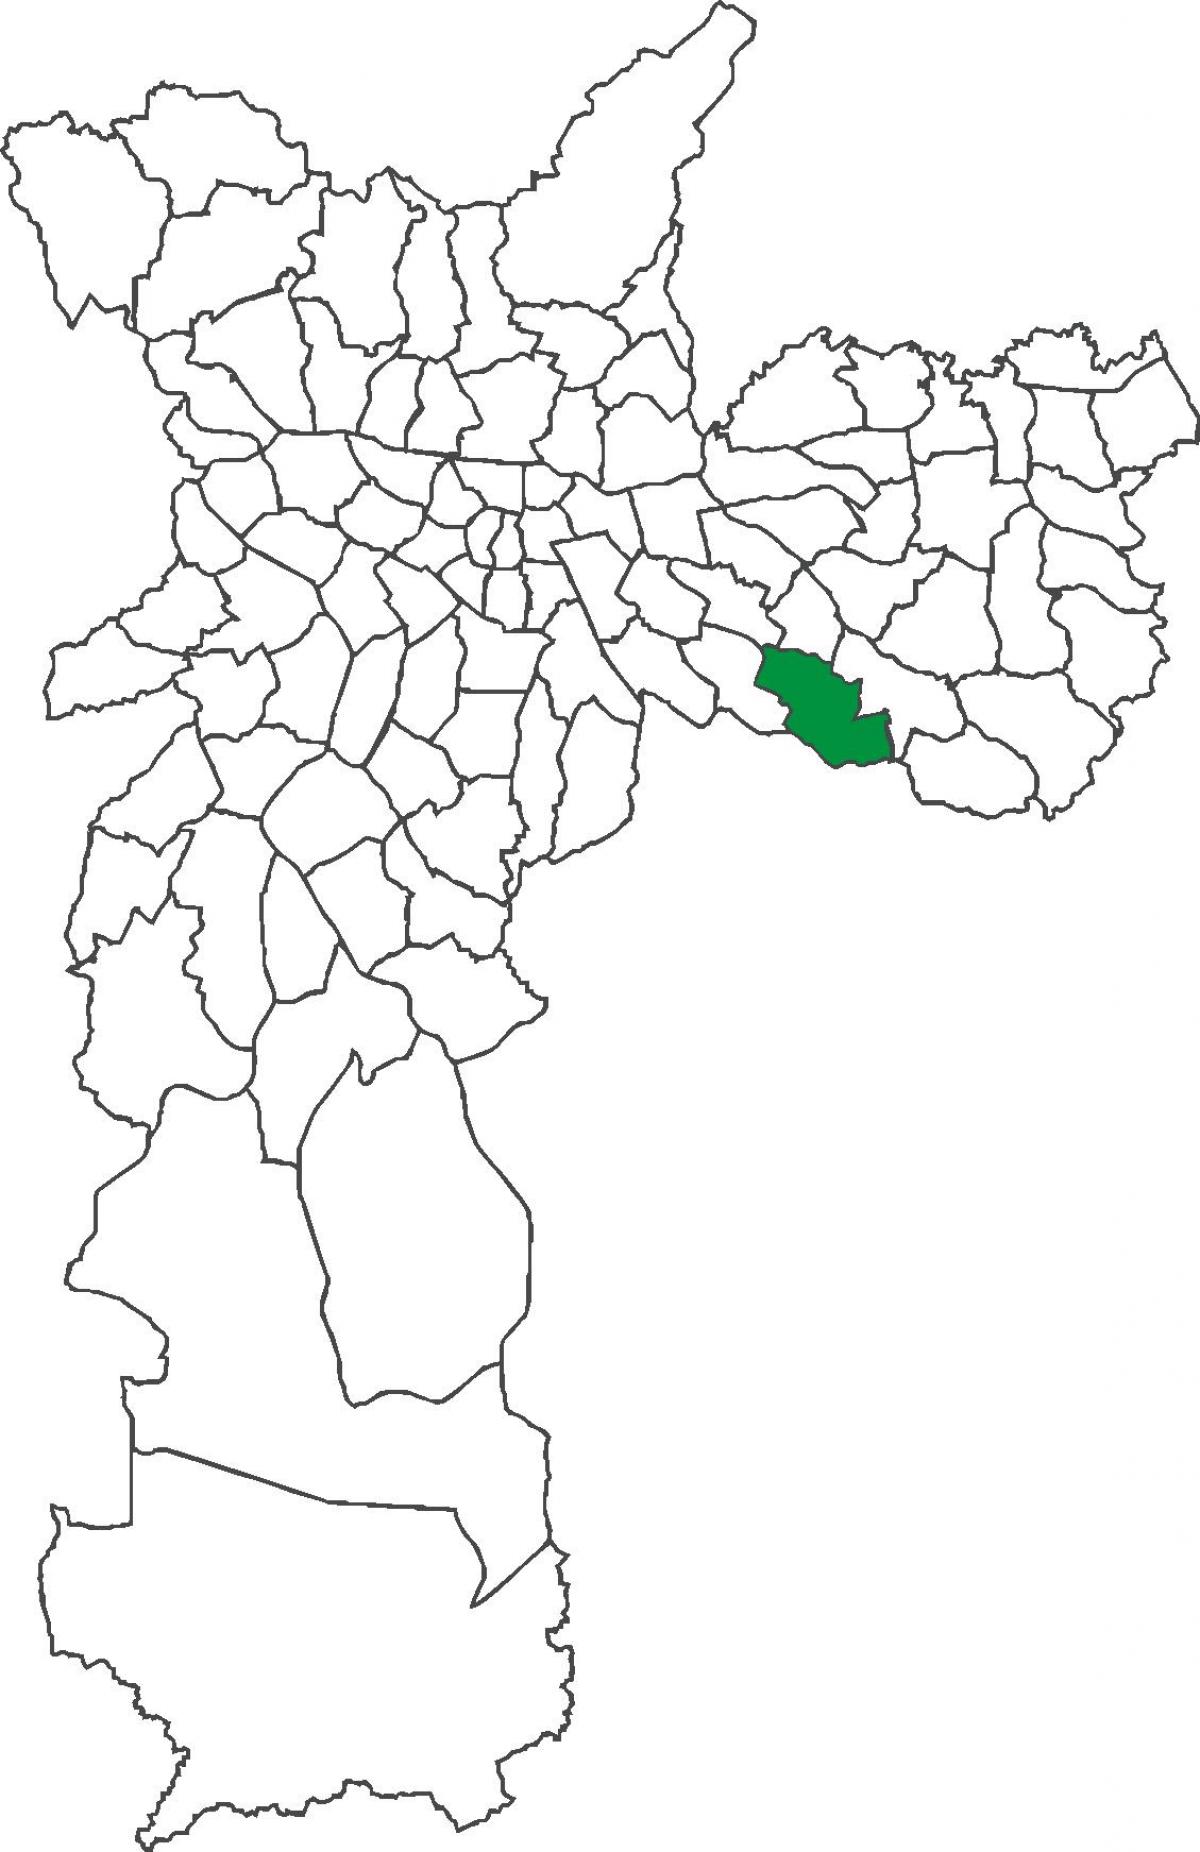 Kart rayonu Sapopemba